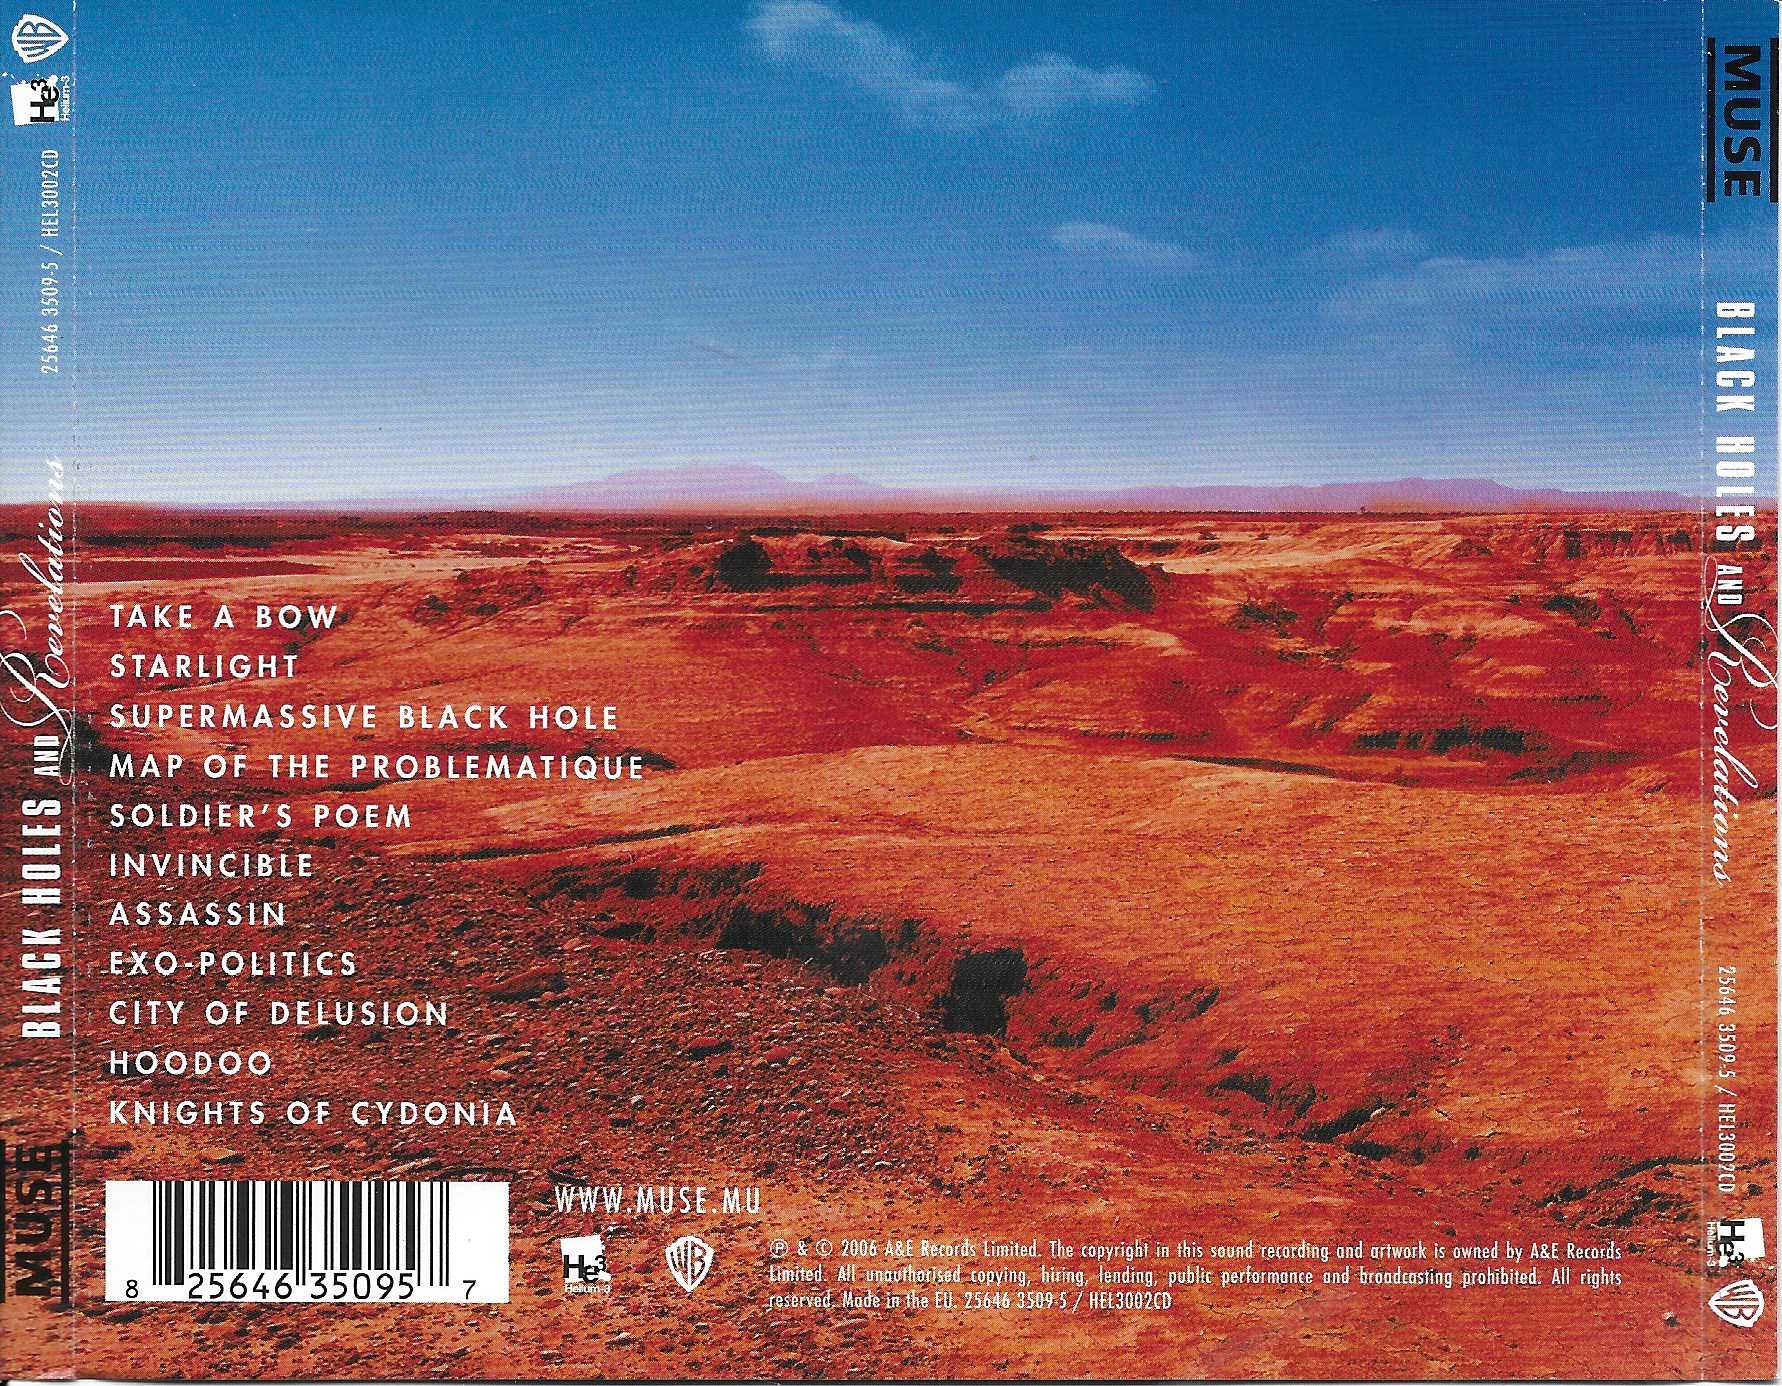 Back cover of HEL 3007 CD